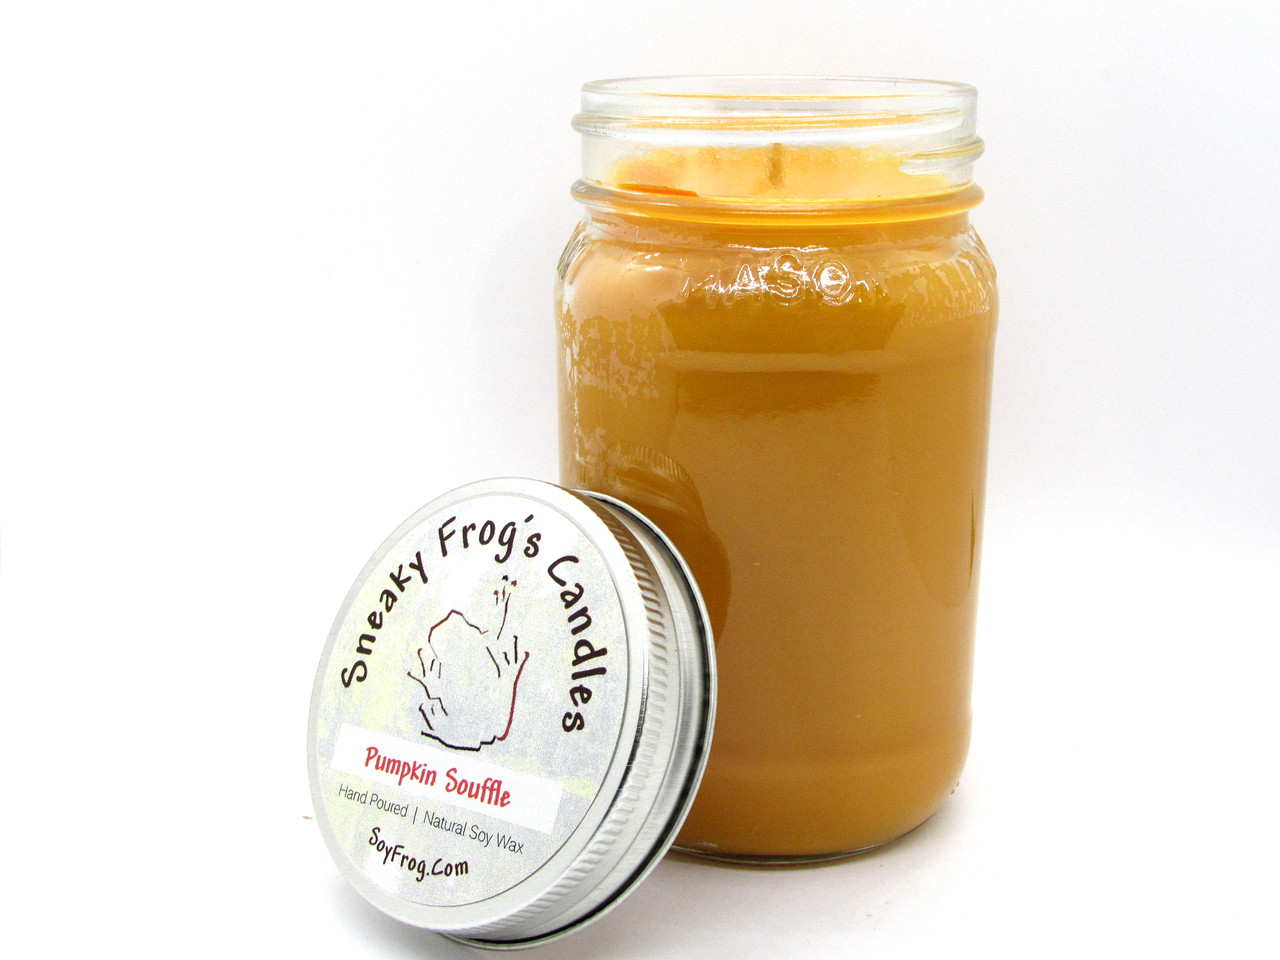 Pumpkin Souffle - Scented Natural Soy Wax Candle - 16 Oz Mason Jar